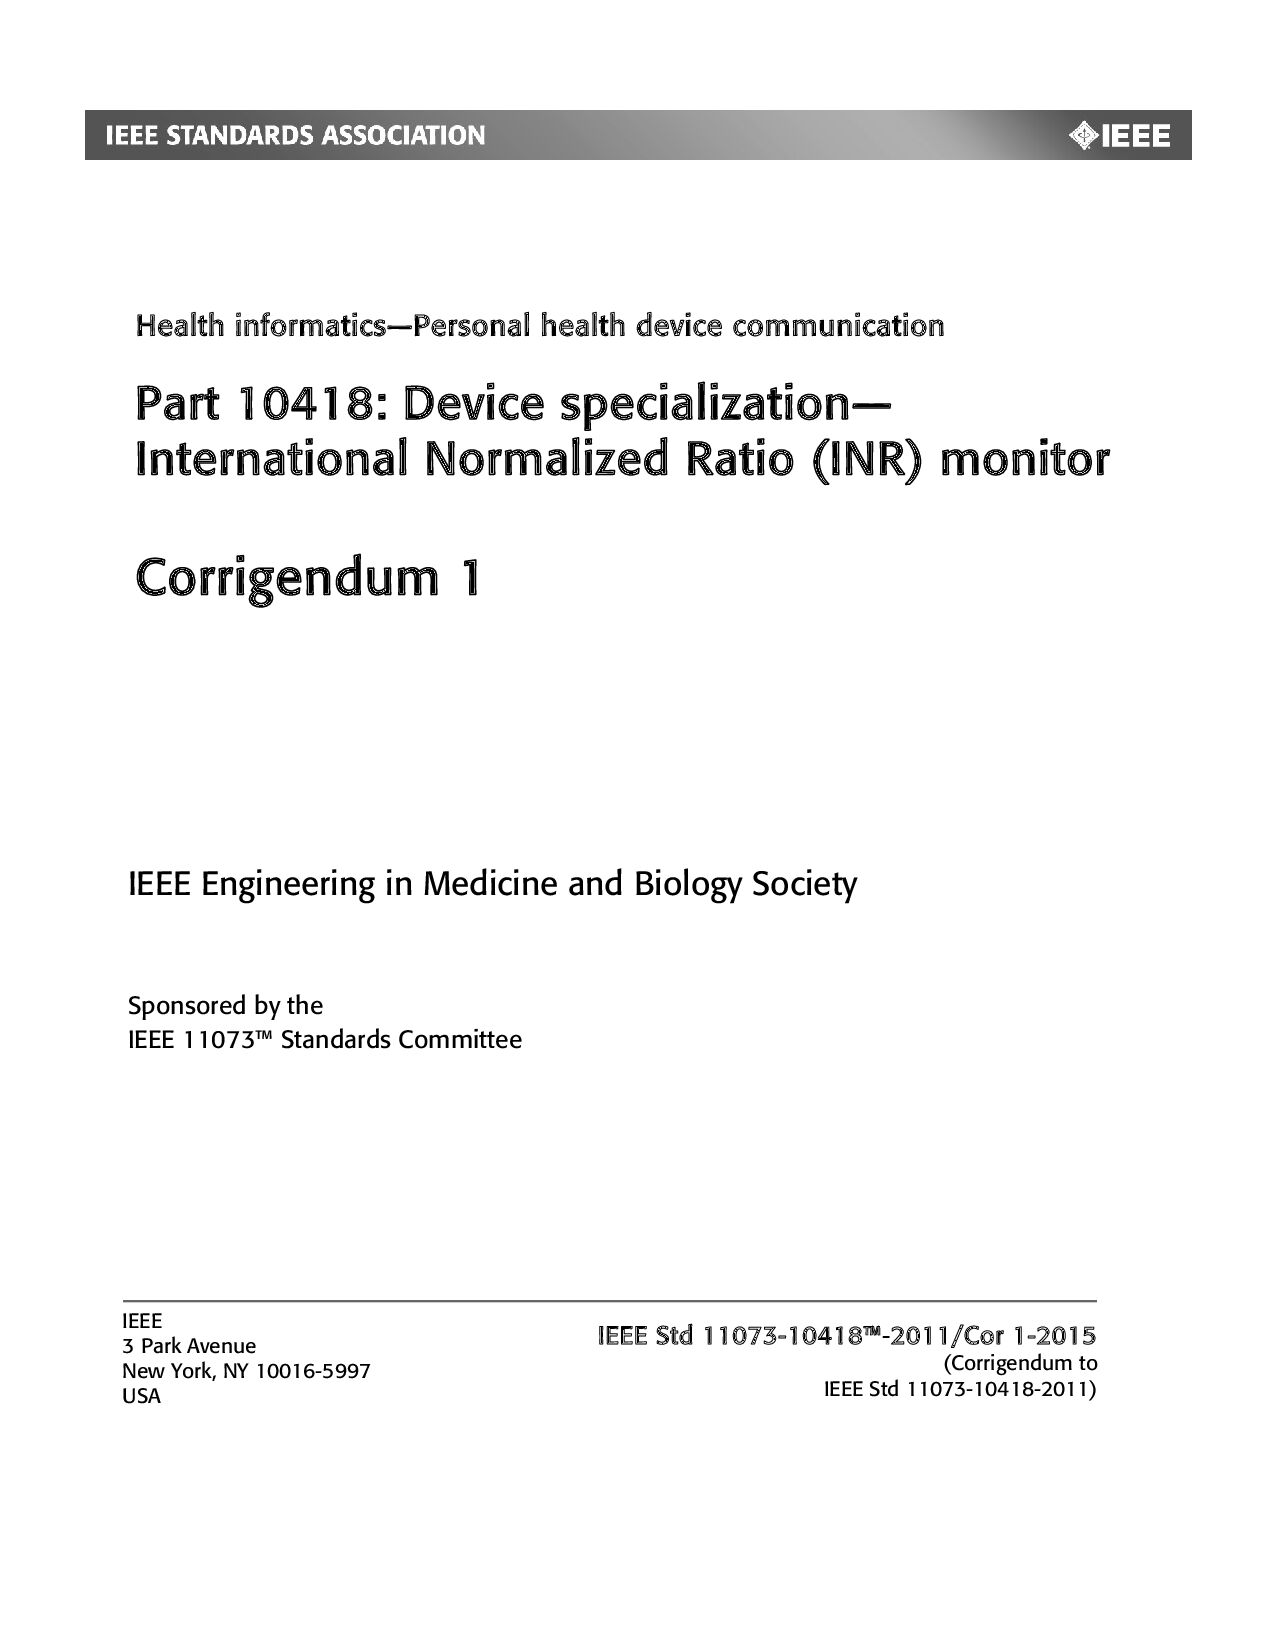 IEEE 11073-10418 CORR 1:2015